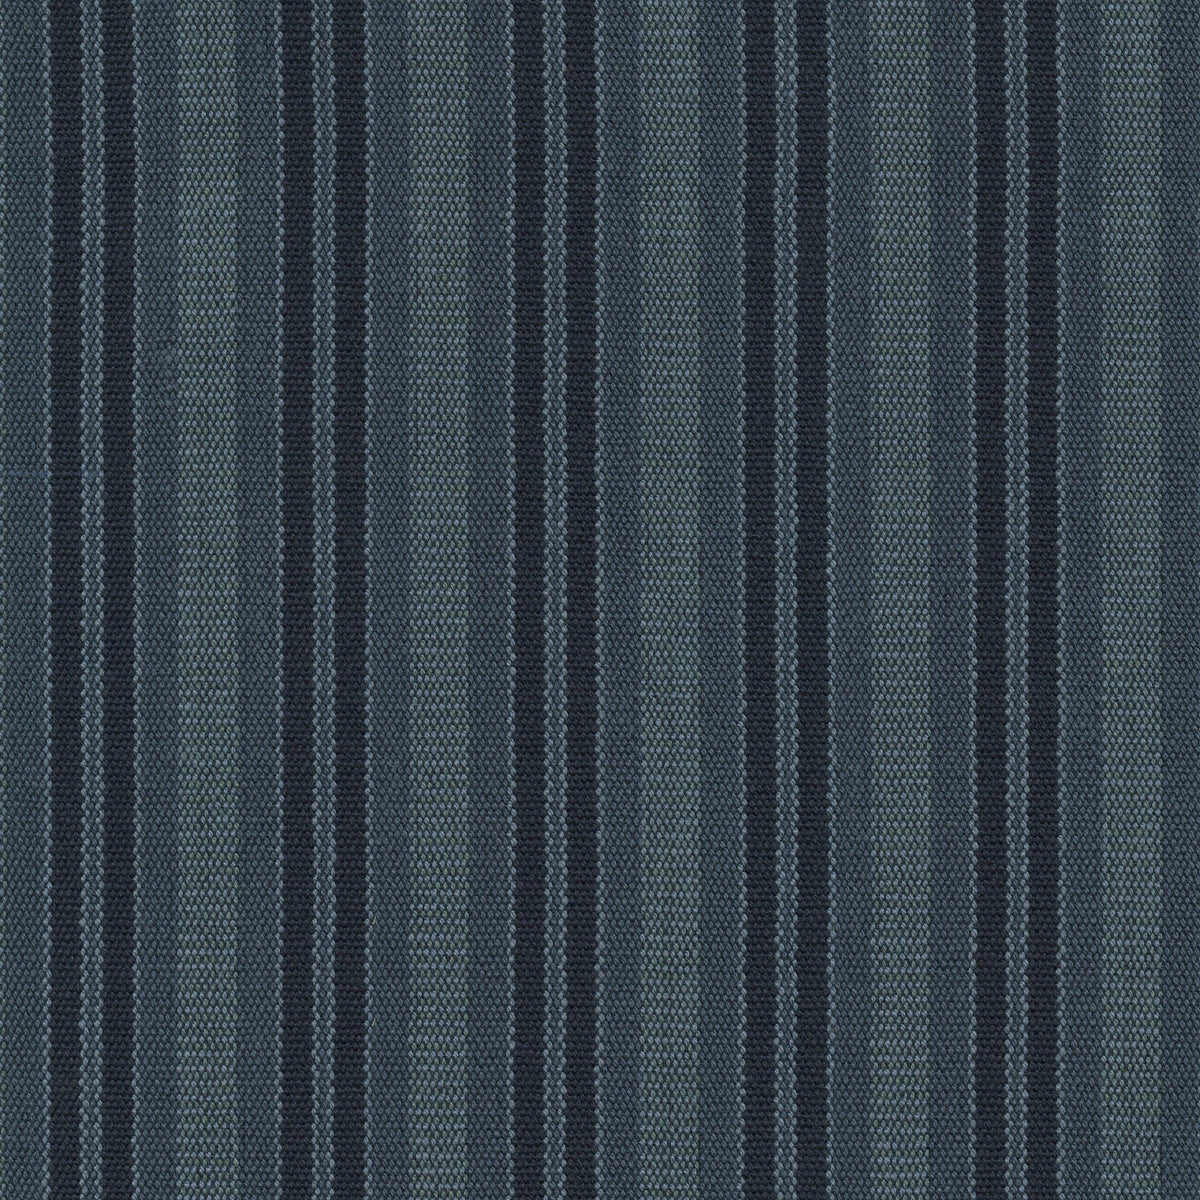 P/K Lifestyles Silverton Stripe - Indigo 411690 Fabric Swatch